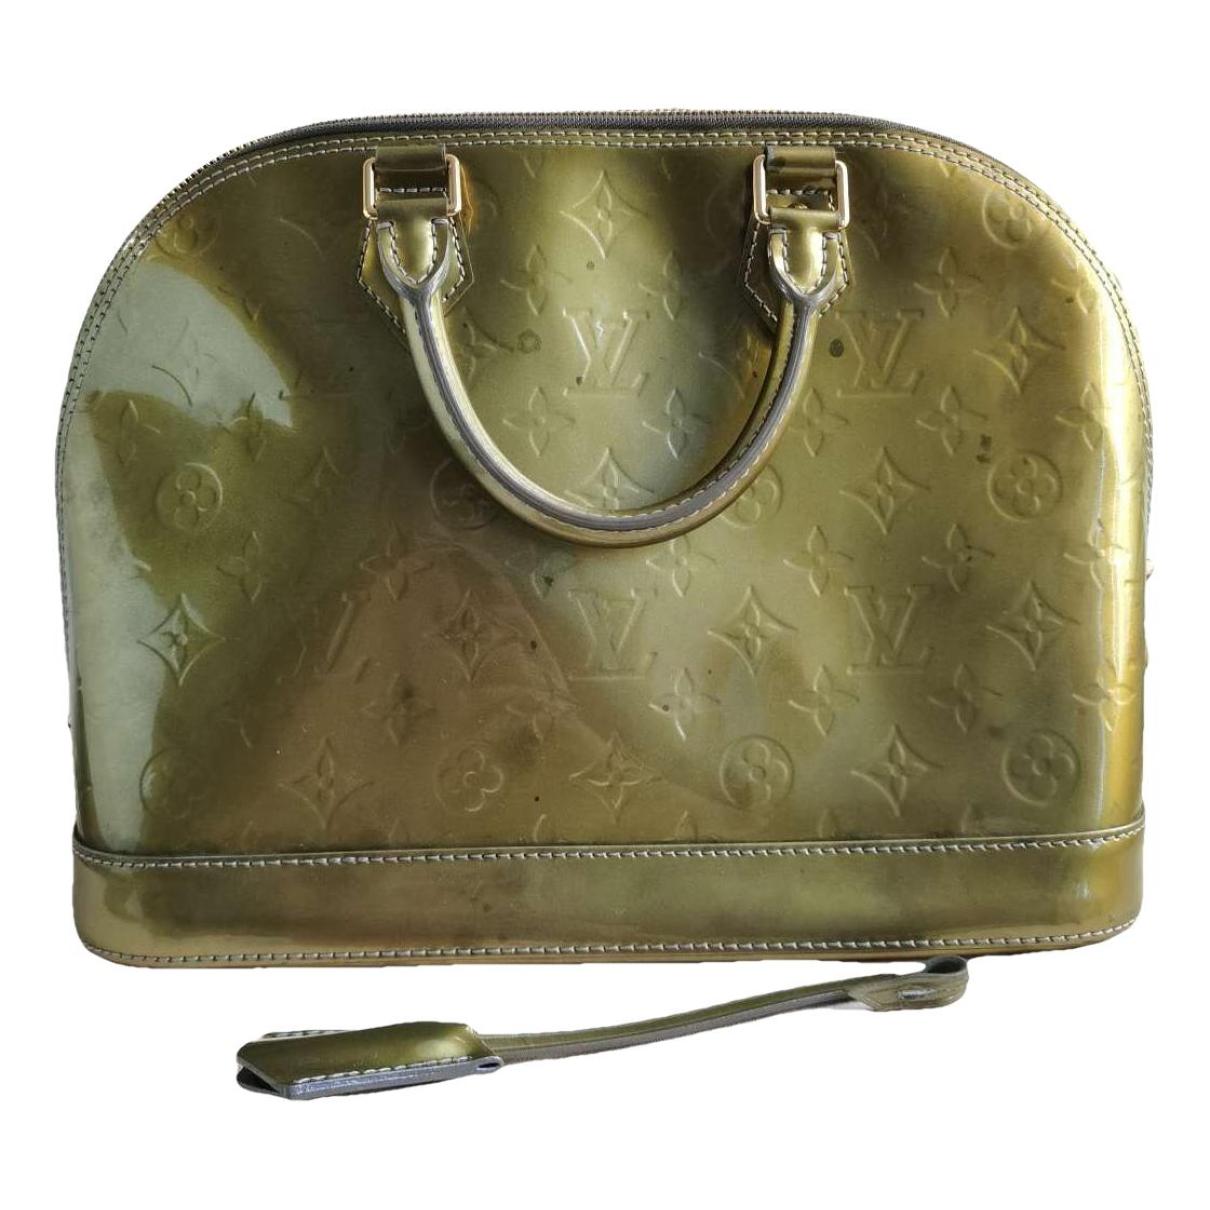 Louis Vuitton Green Patent Leather Alma PM Bag Louis Vuitton